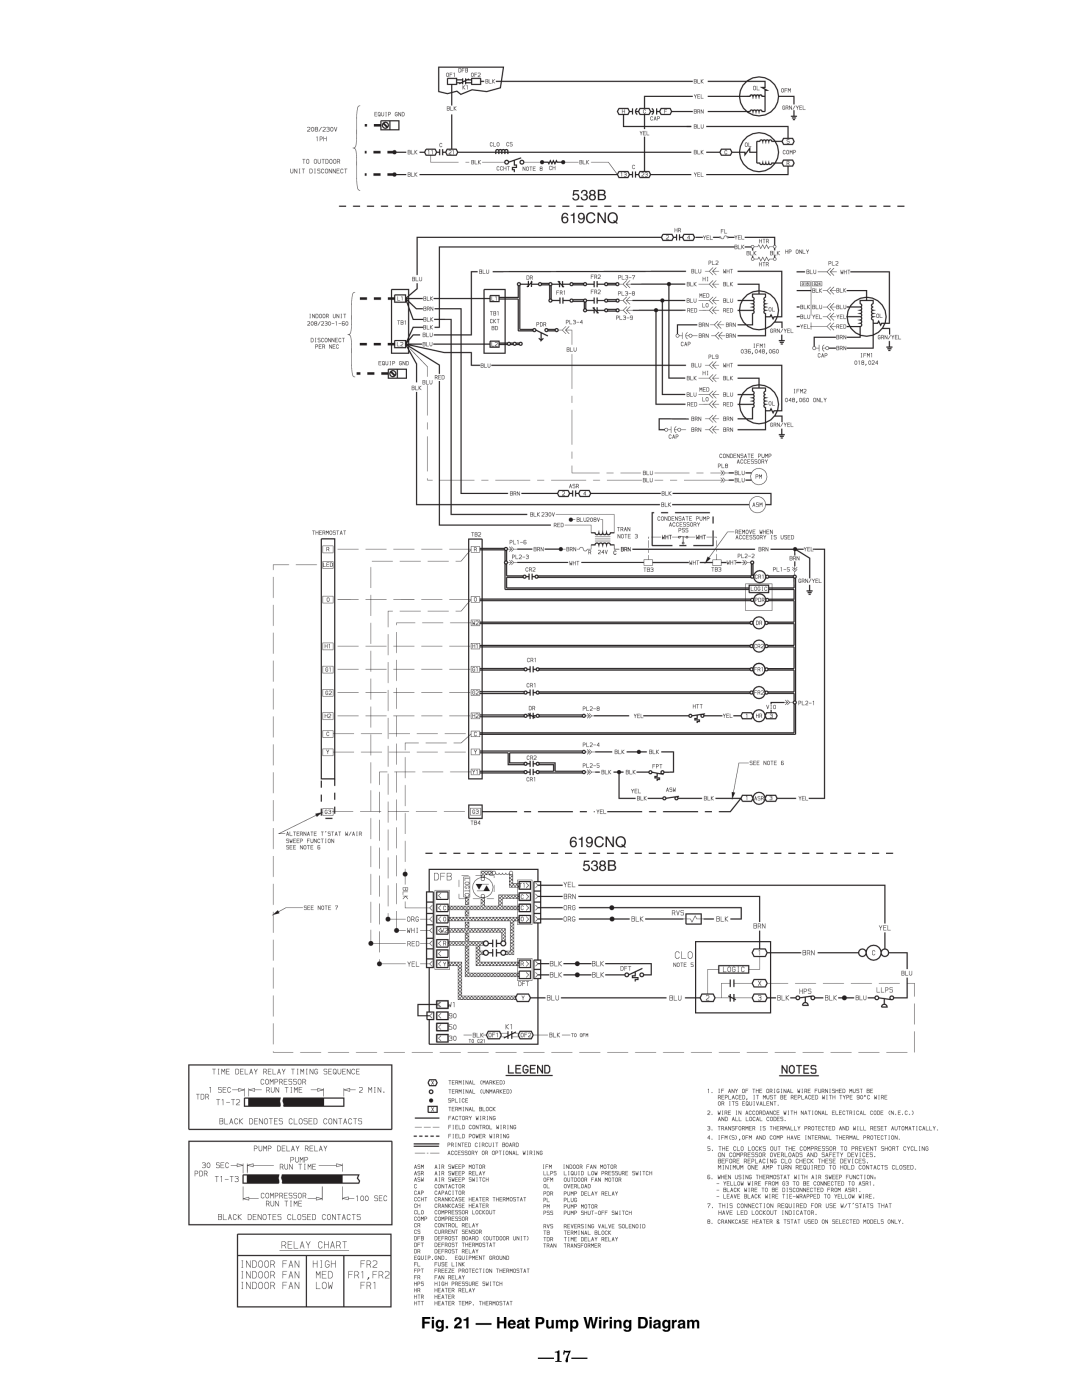 Bryant 619CNQ, 619CNF installation instructions Heat Pump Wiring Diagram, a40-1637 